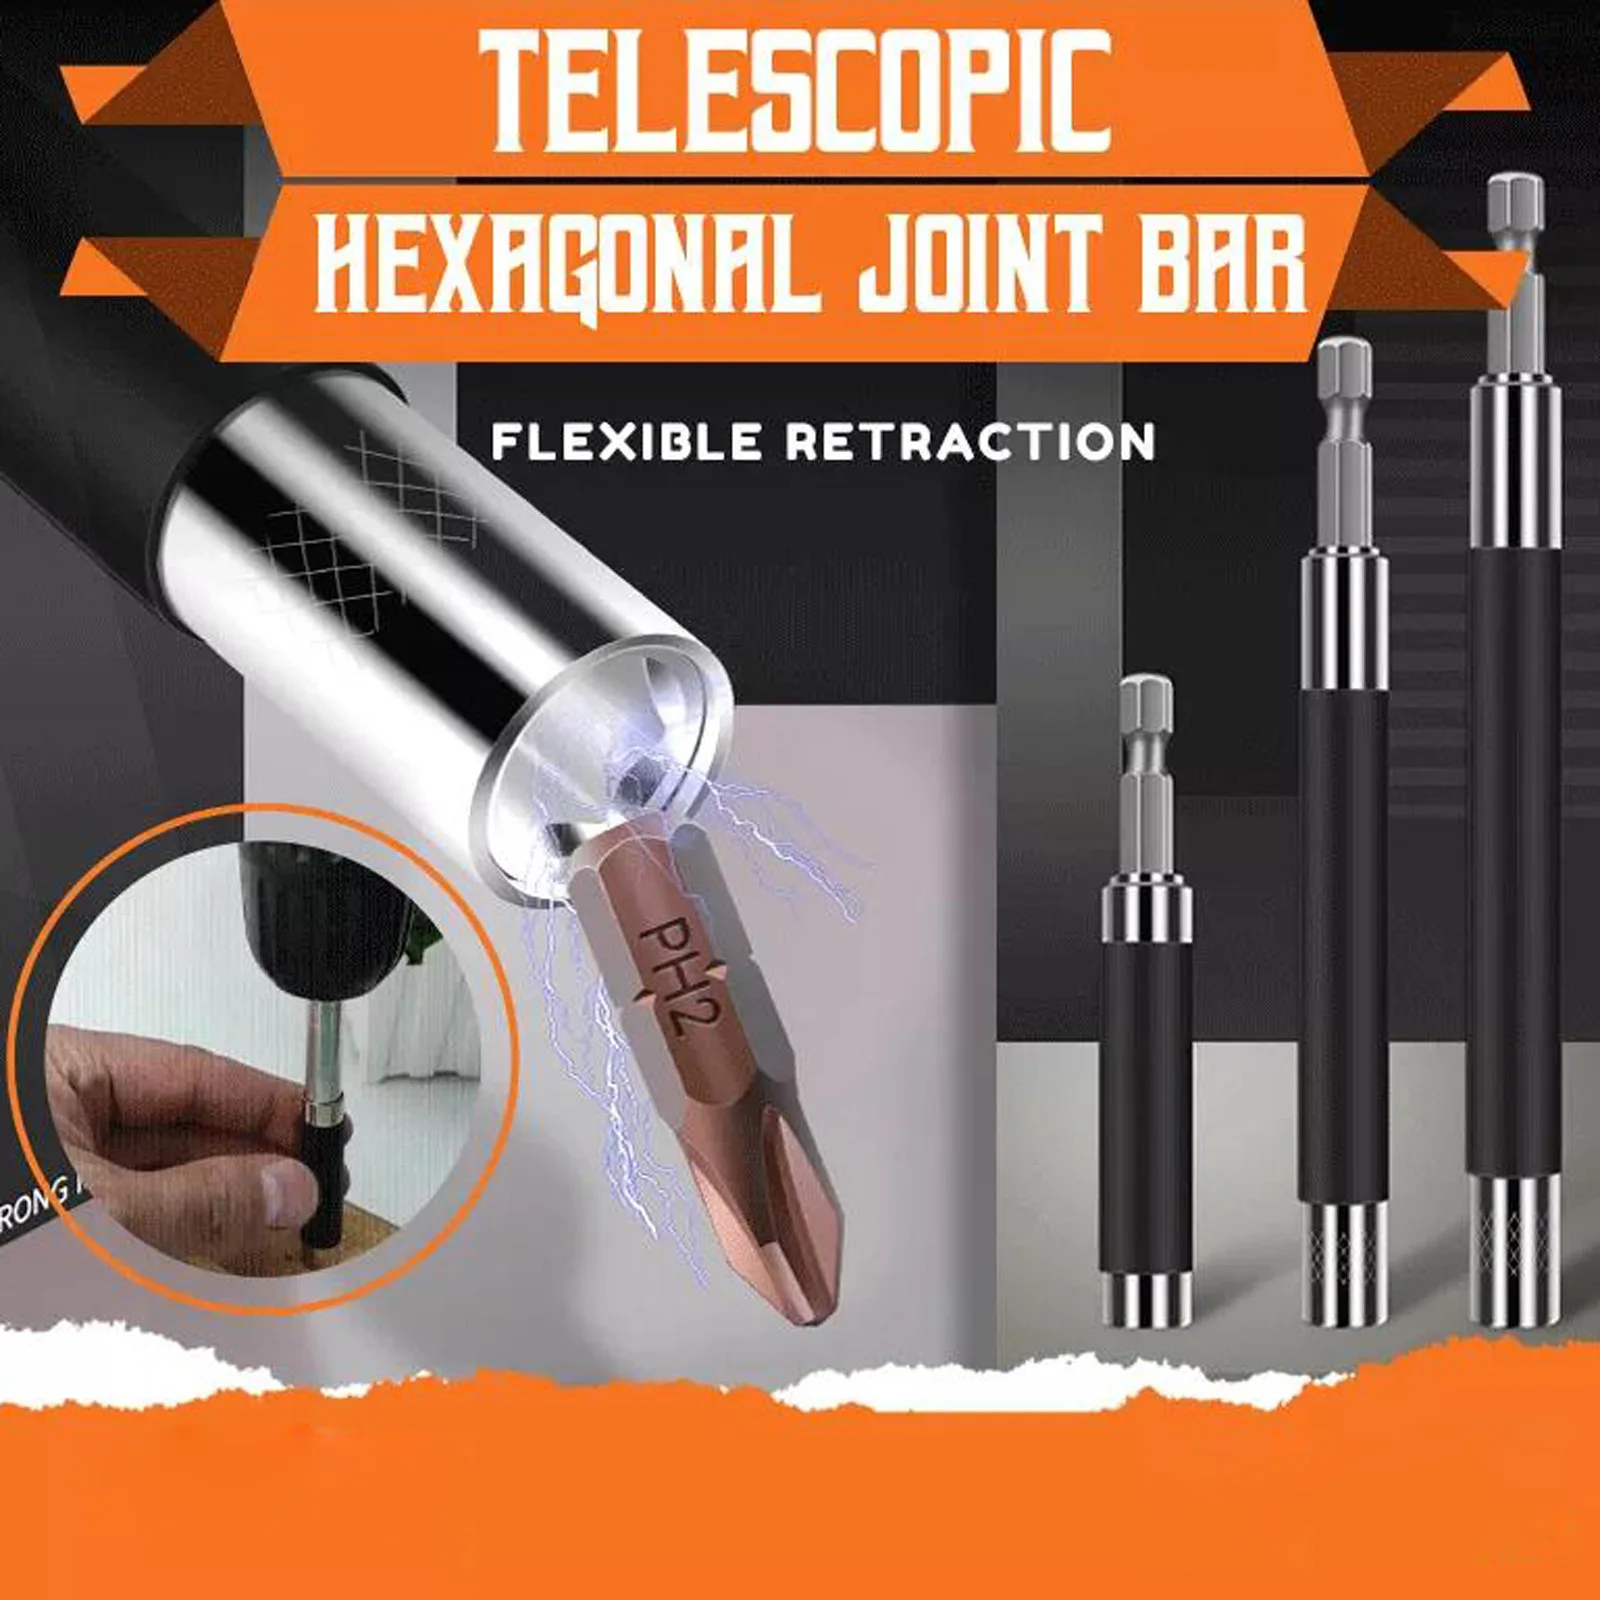 

1pc Telescopic Hexagonal Joint Bar Screwdriver Extension Rod Long Handle Screwdriver Tip Holder Hand Tools Drive Guide Drill Bit